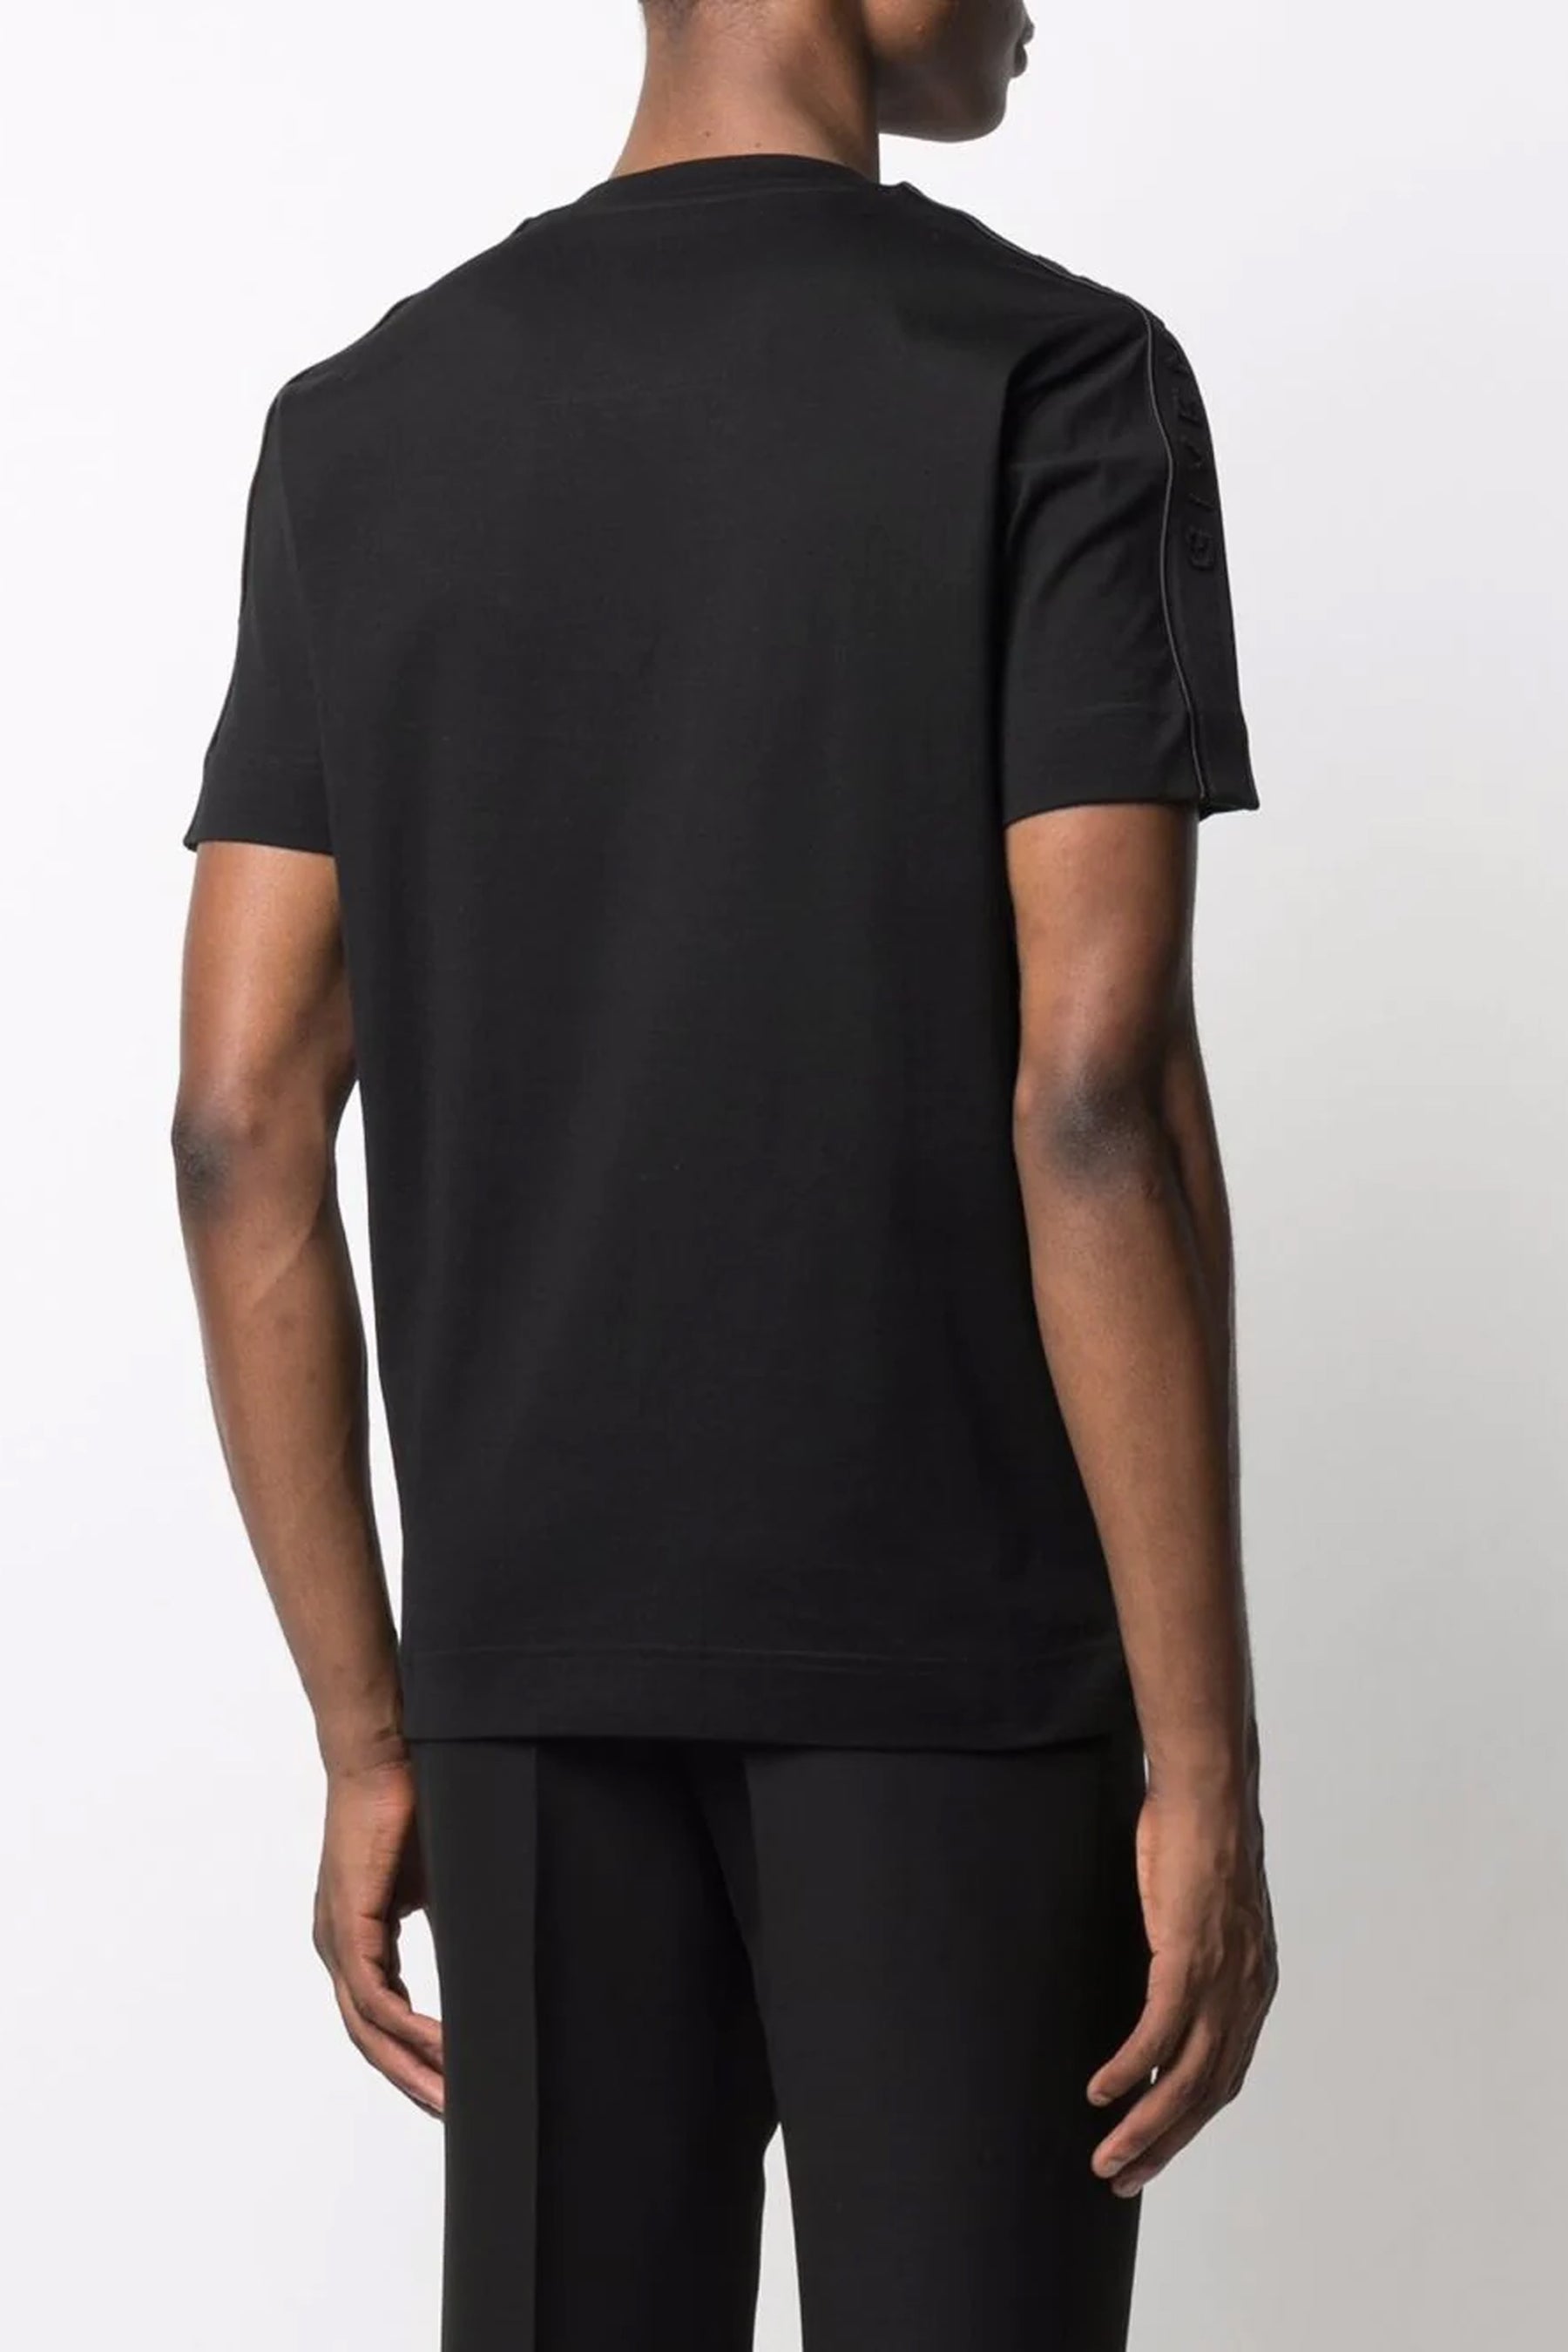 Givenchy logo-tape detail short-sleeve T-shirt